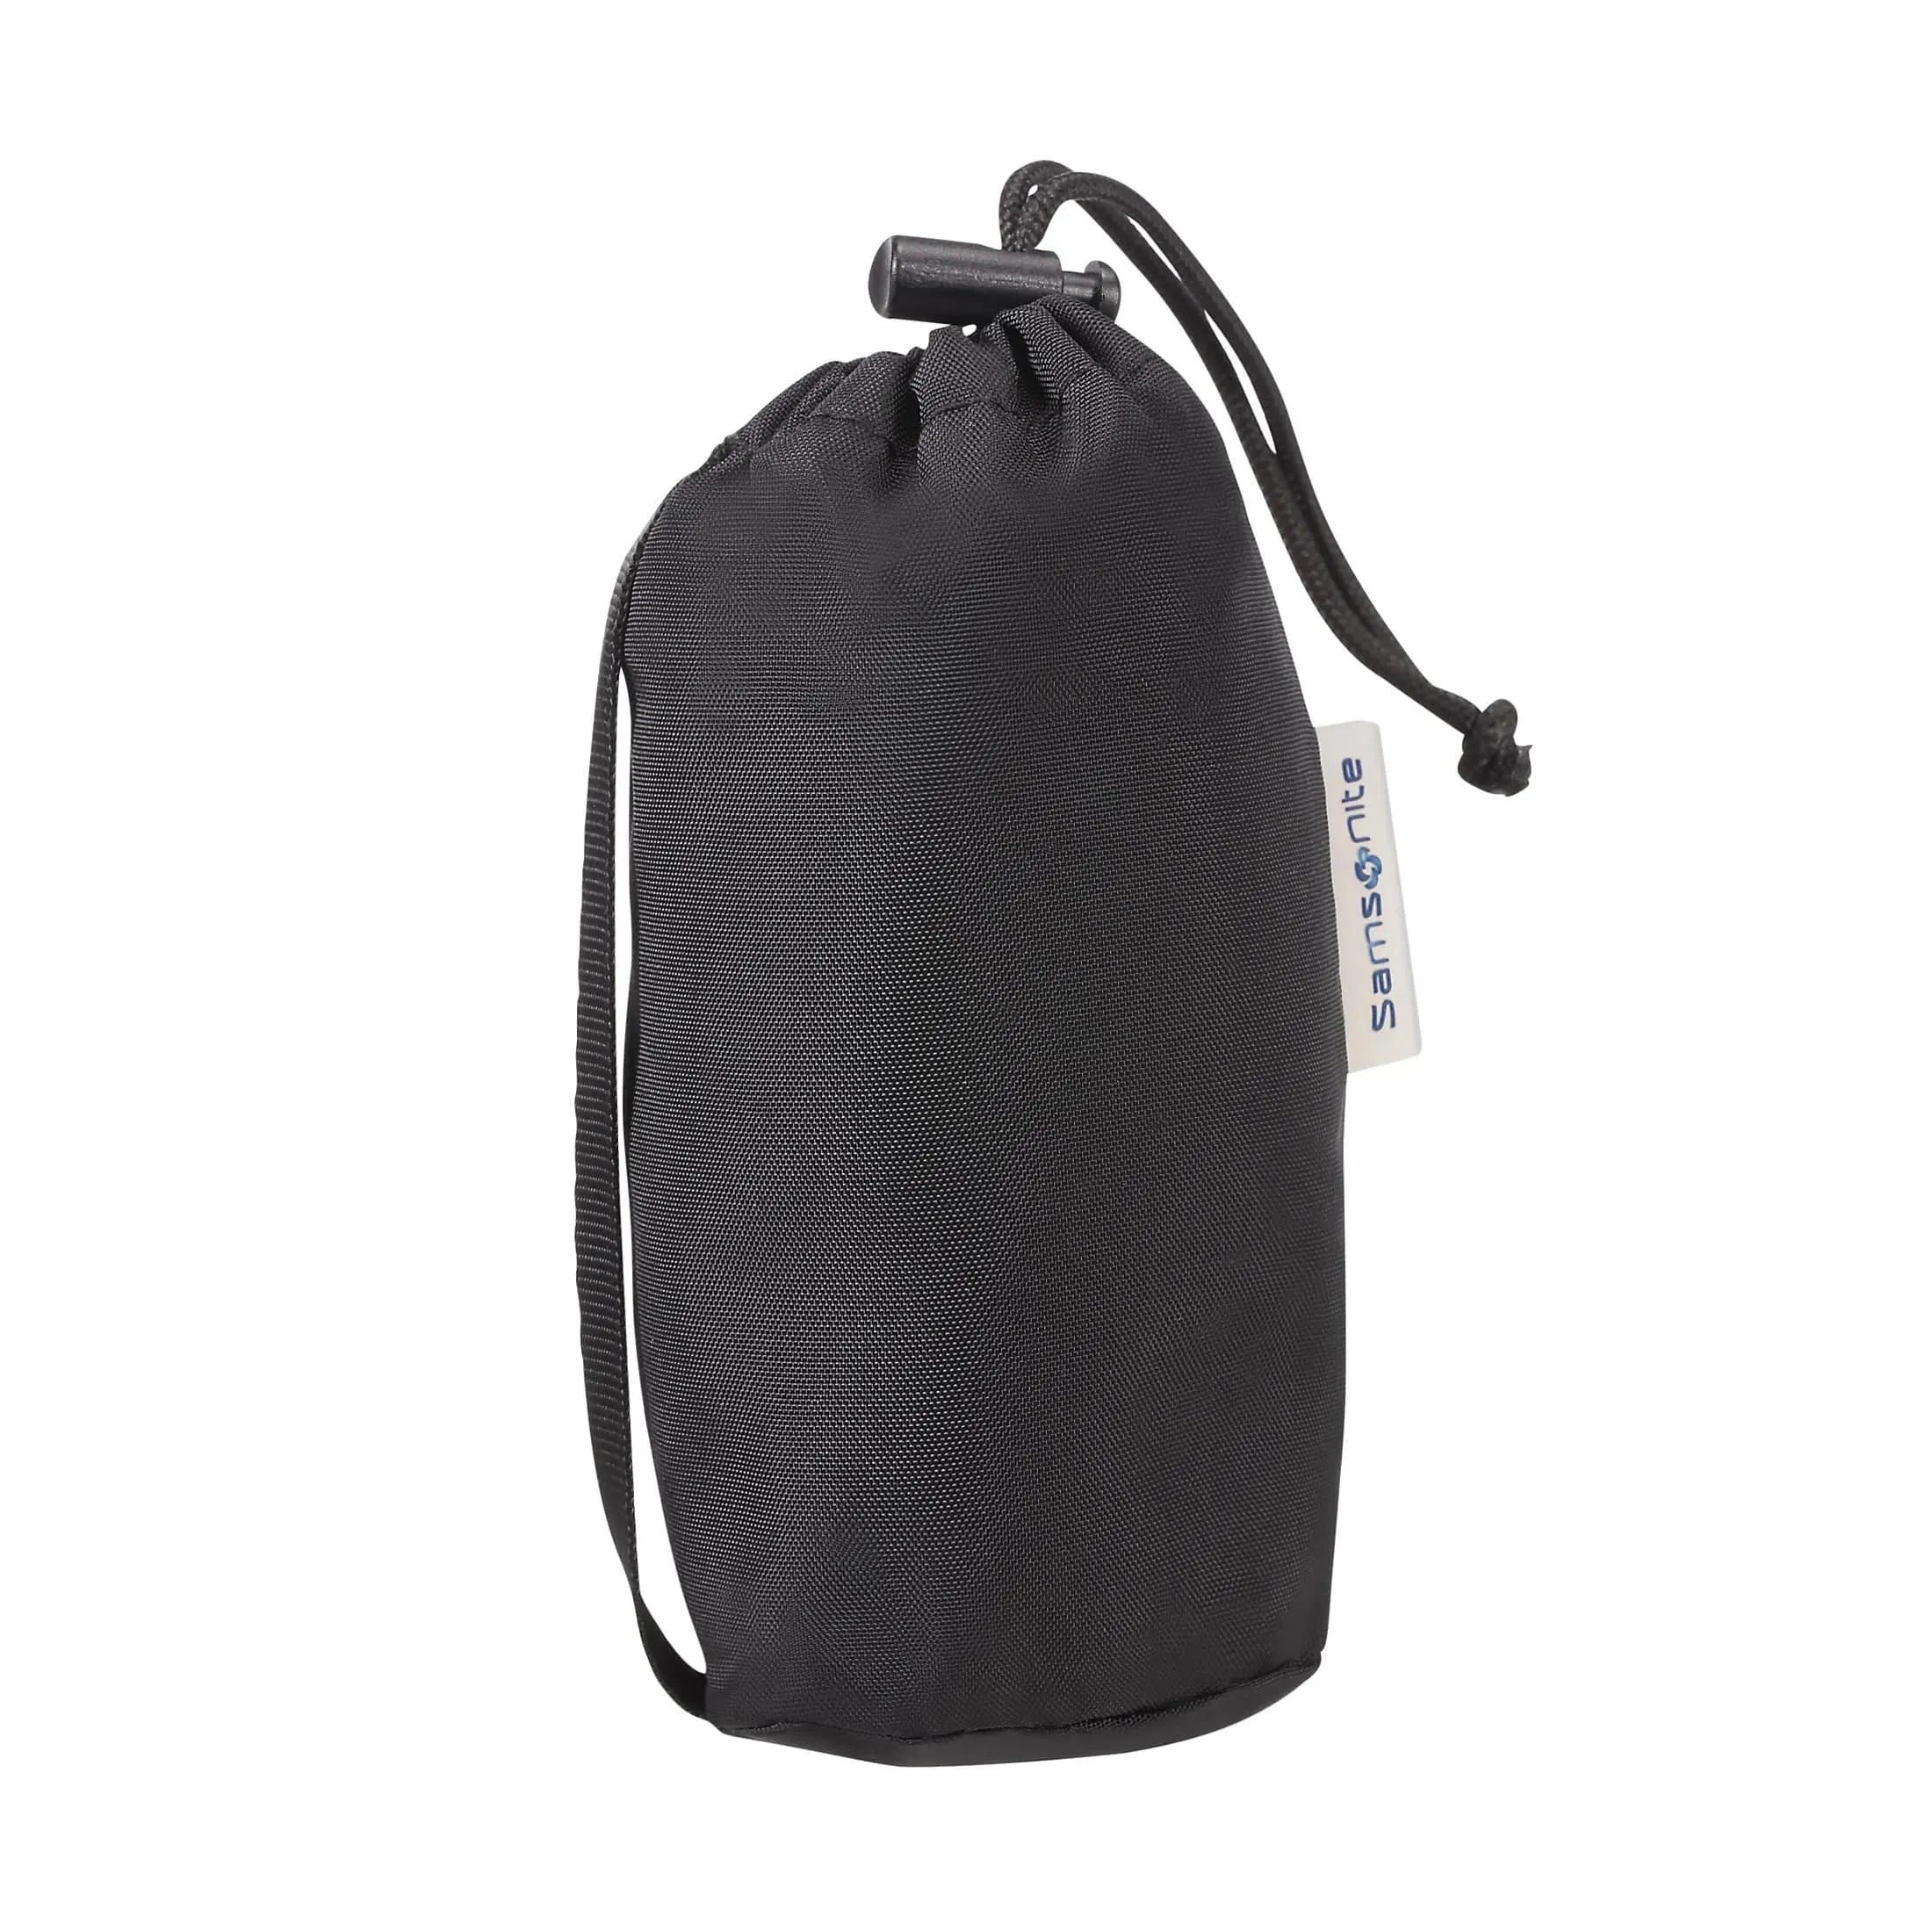 Samsonite Travel Accessories Inflatable neck pillow - black